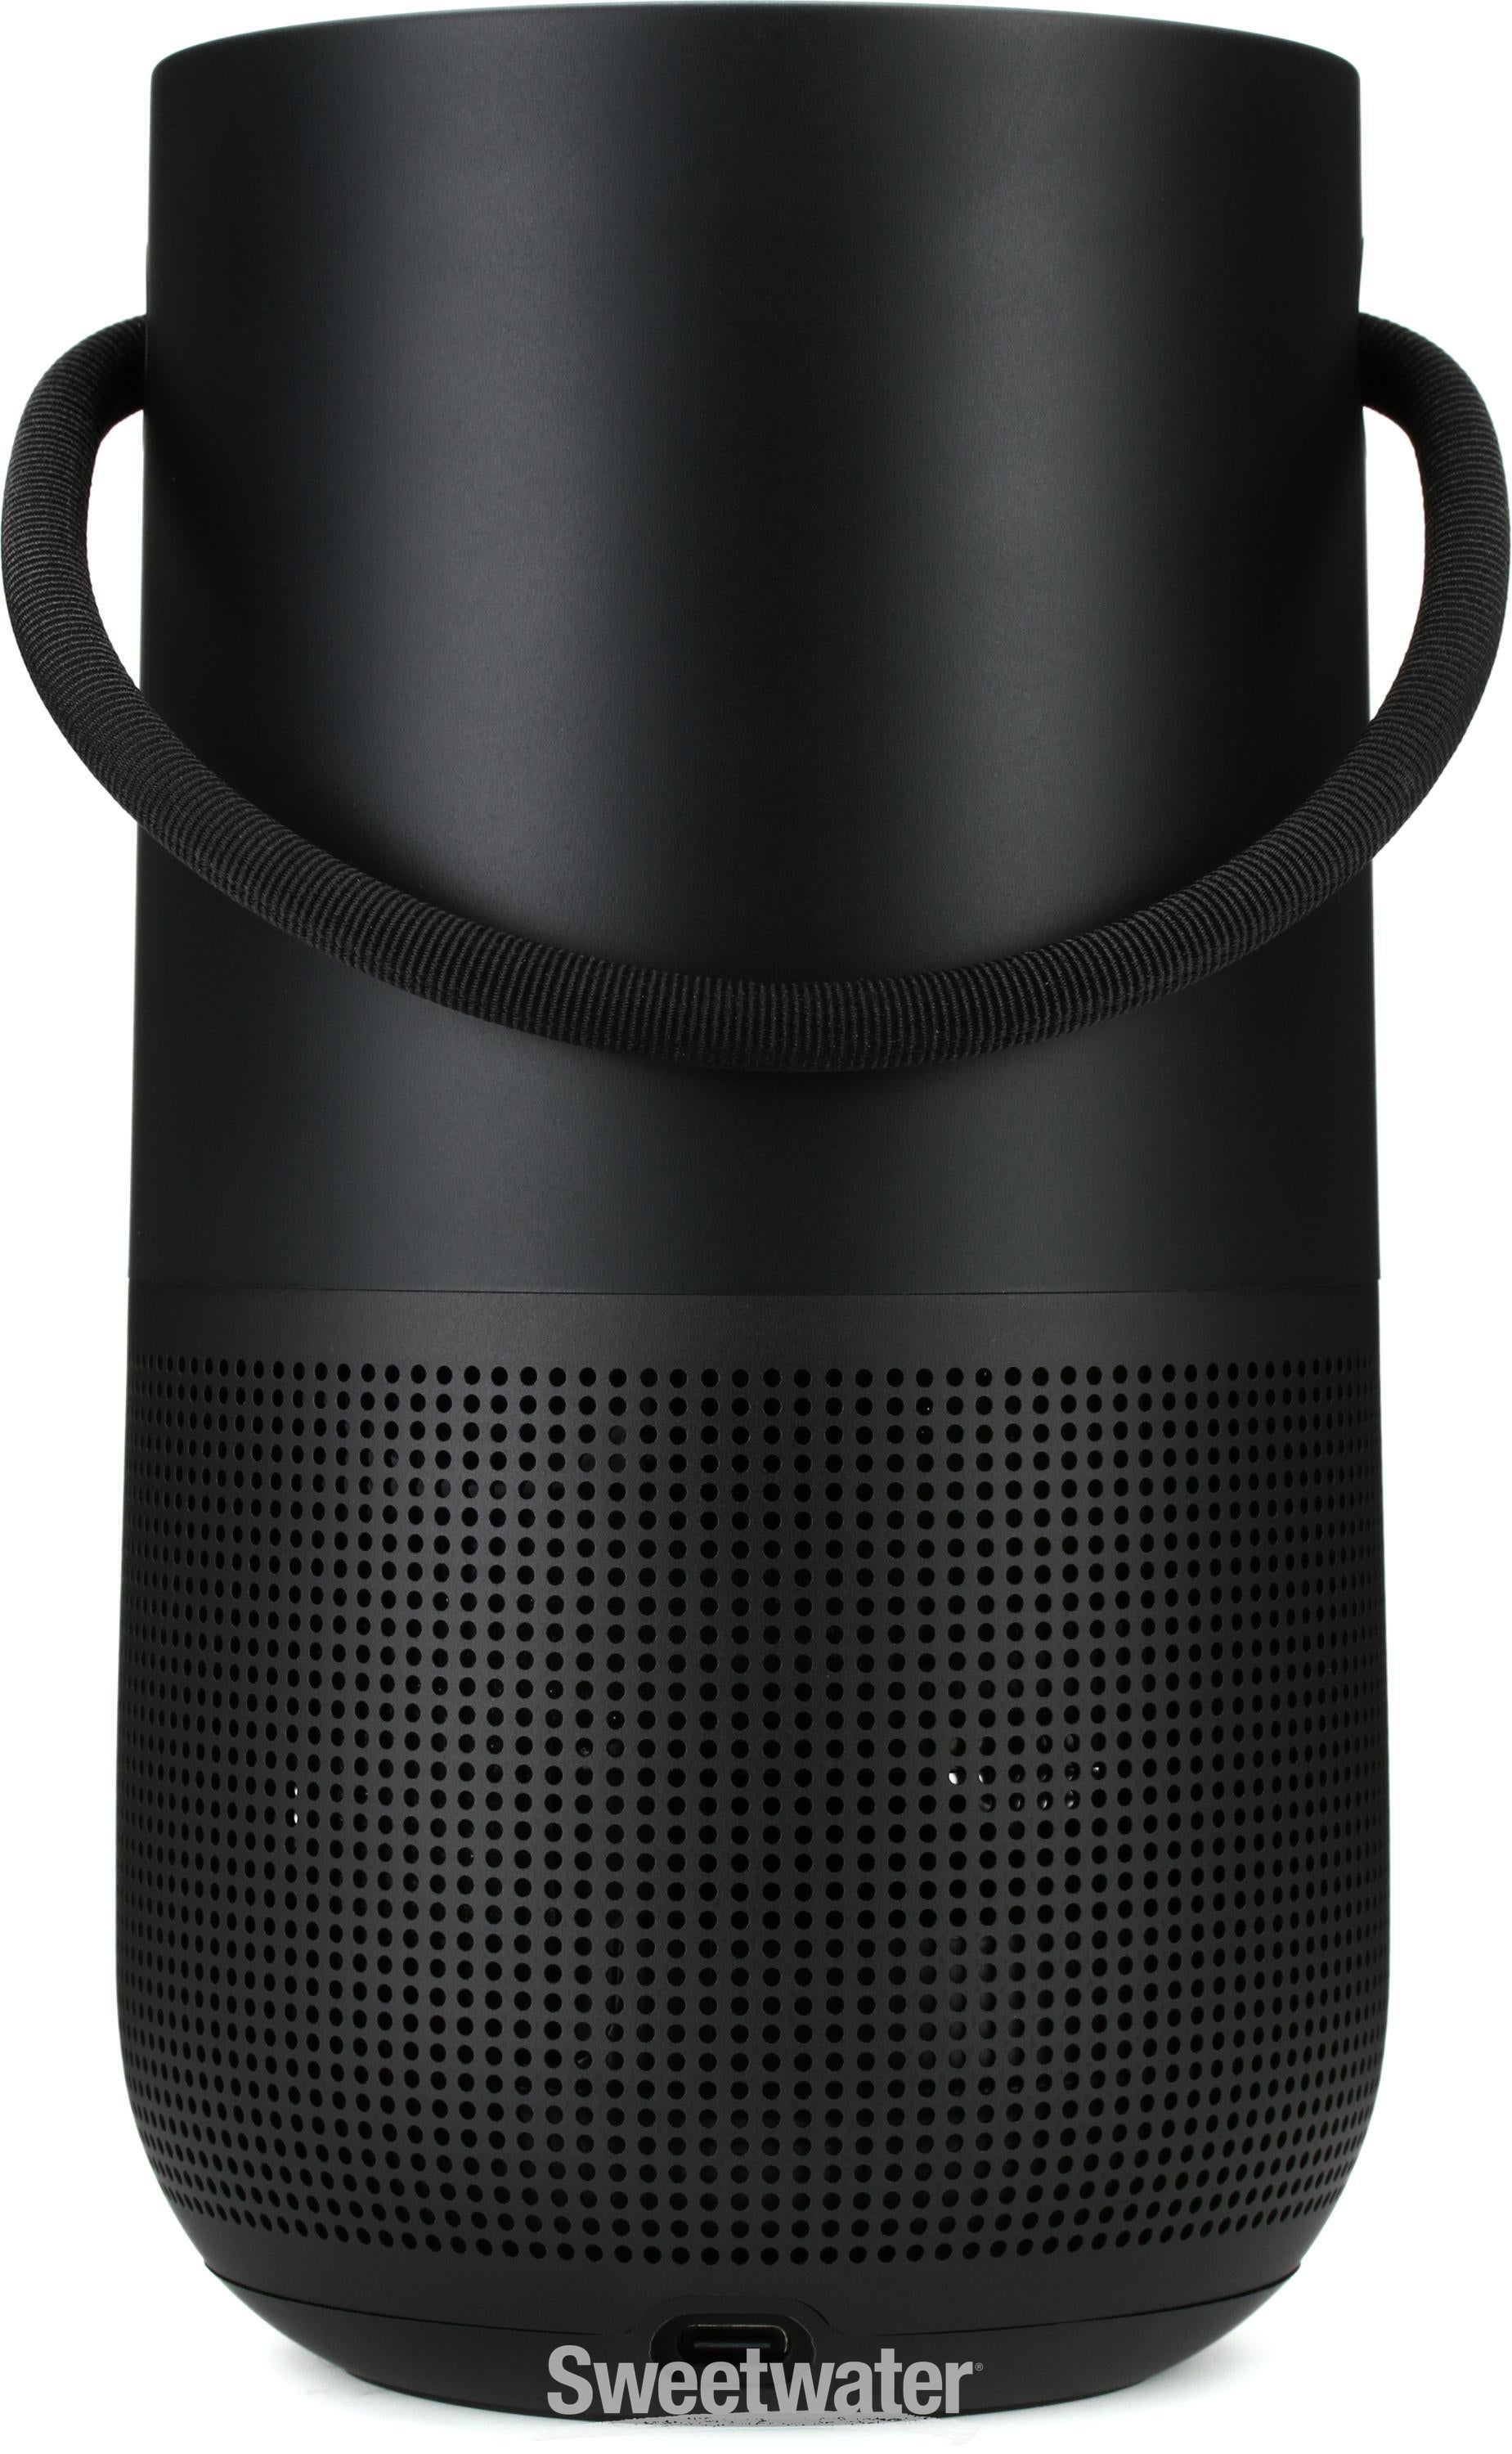 Bose Portable Home Speaker - Triple Black